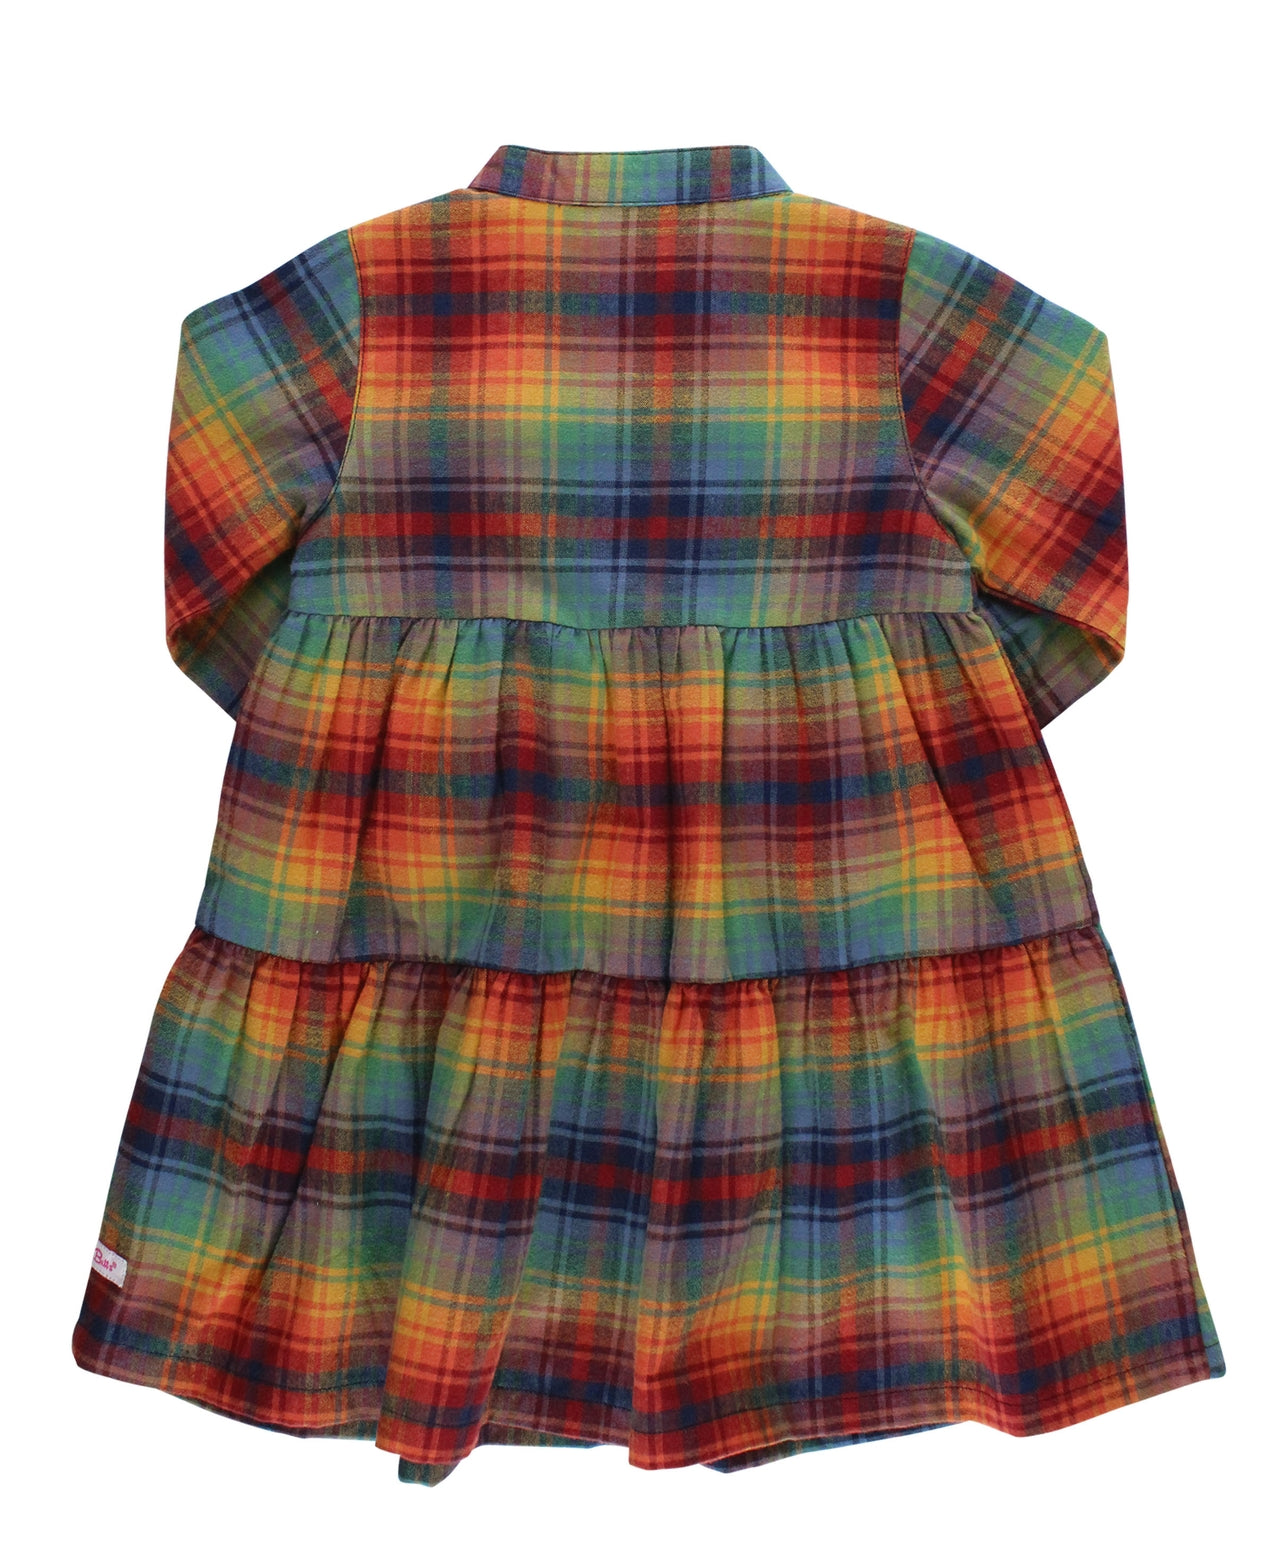 RuffleButts Ruffle Henley Tiered Dress - Storybrook Rainbow (Final Sale)